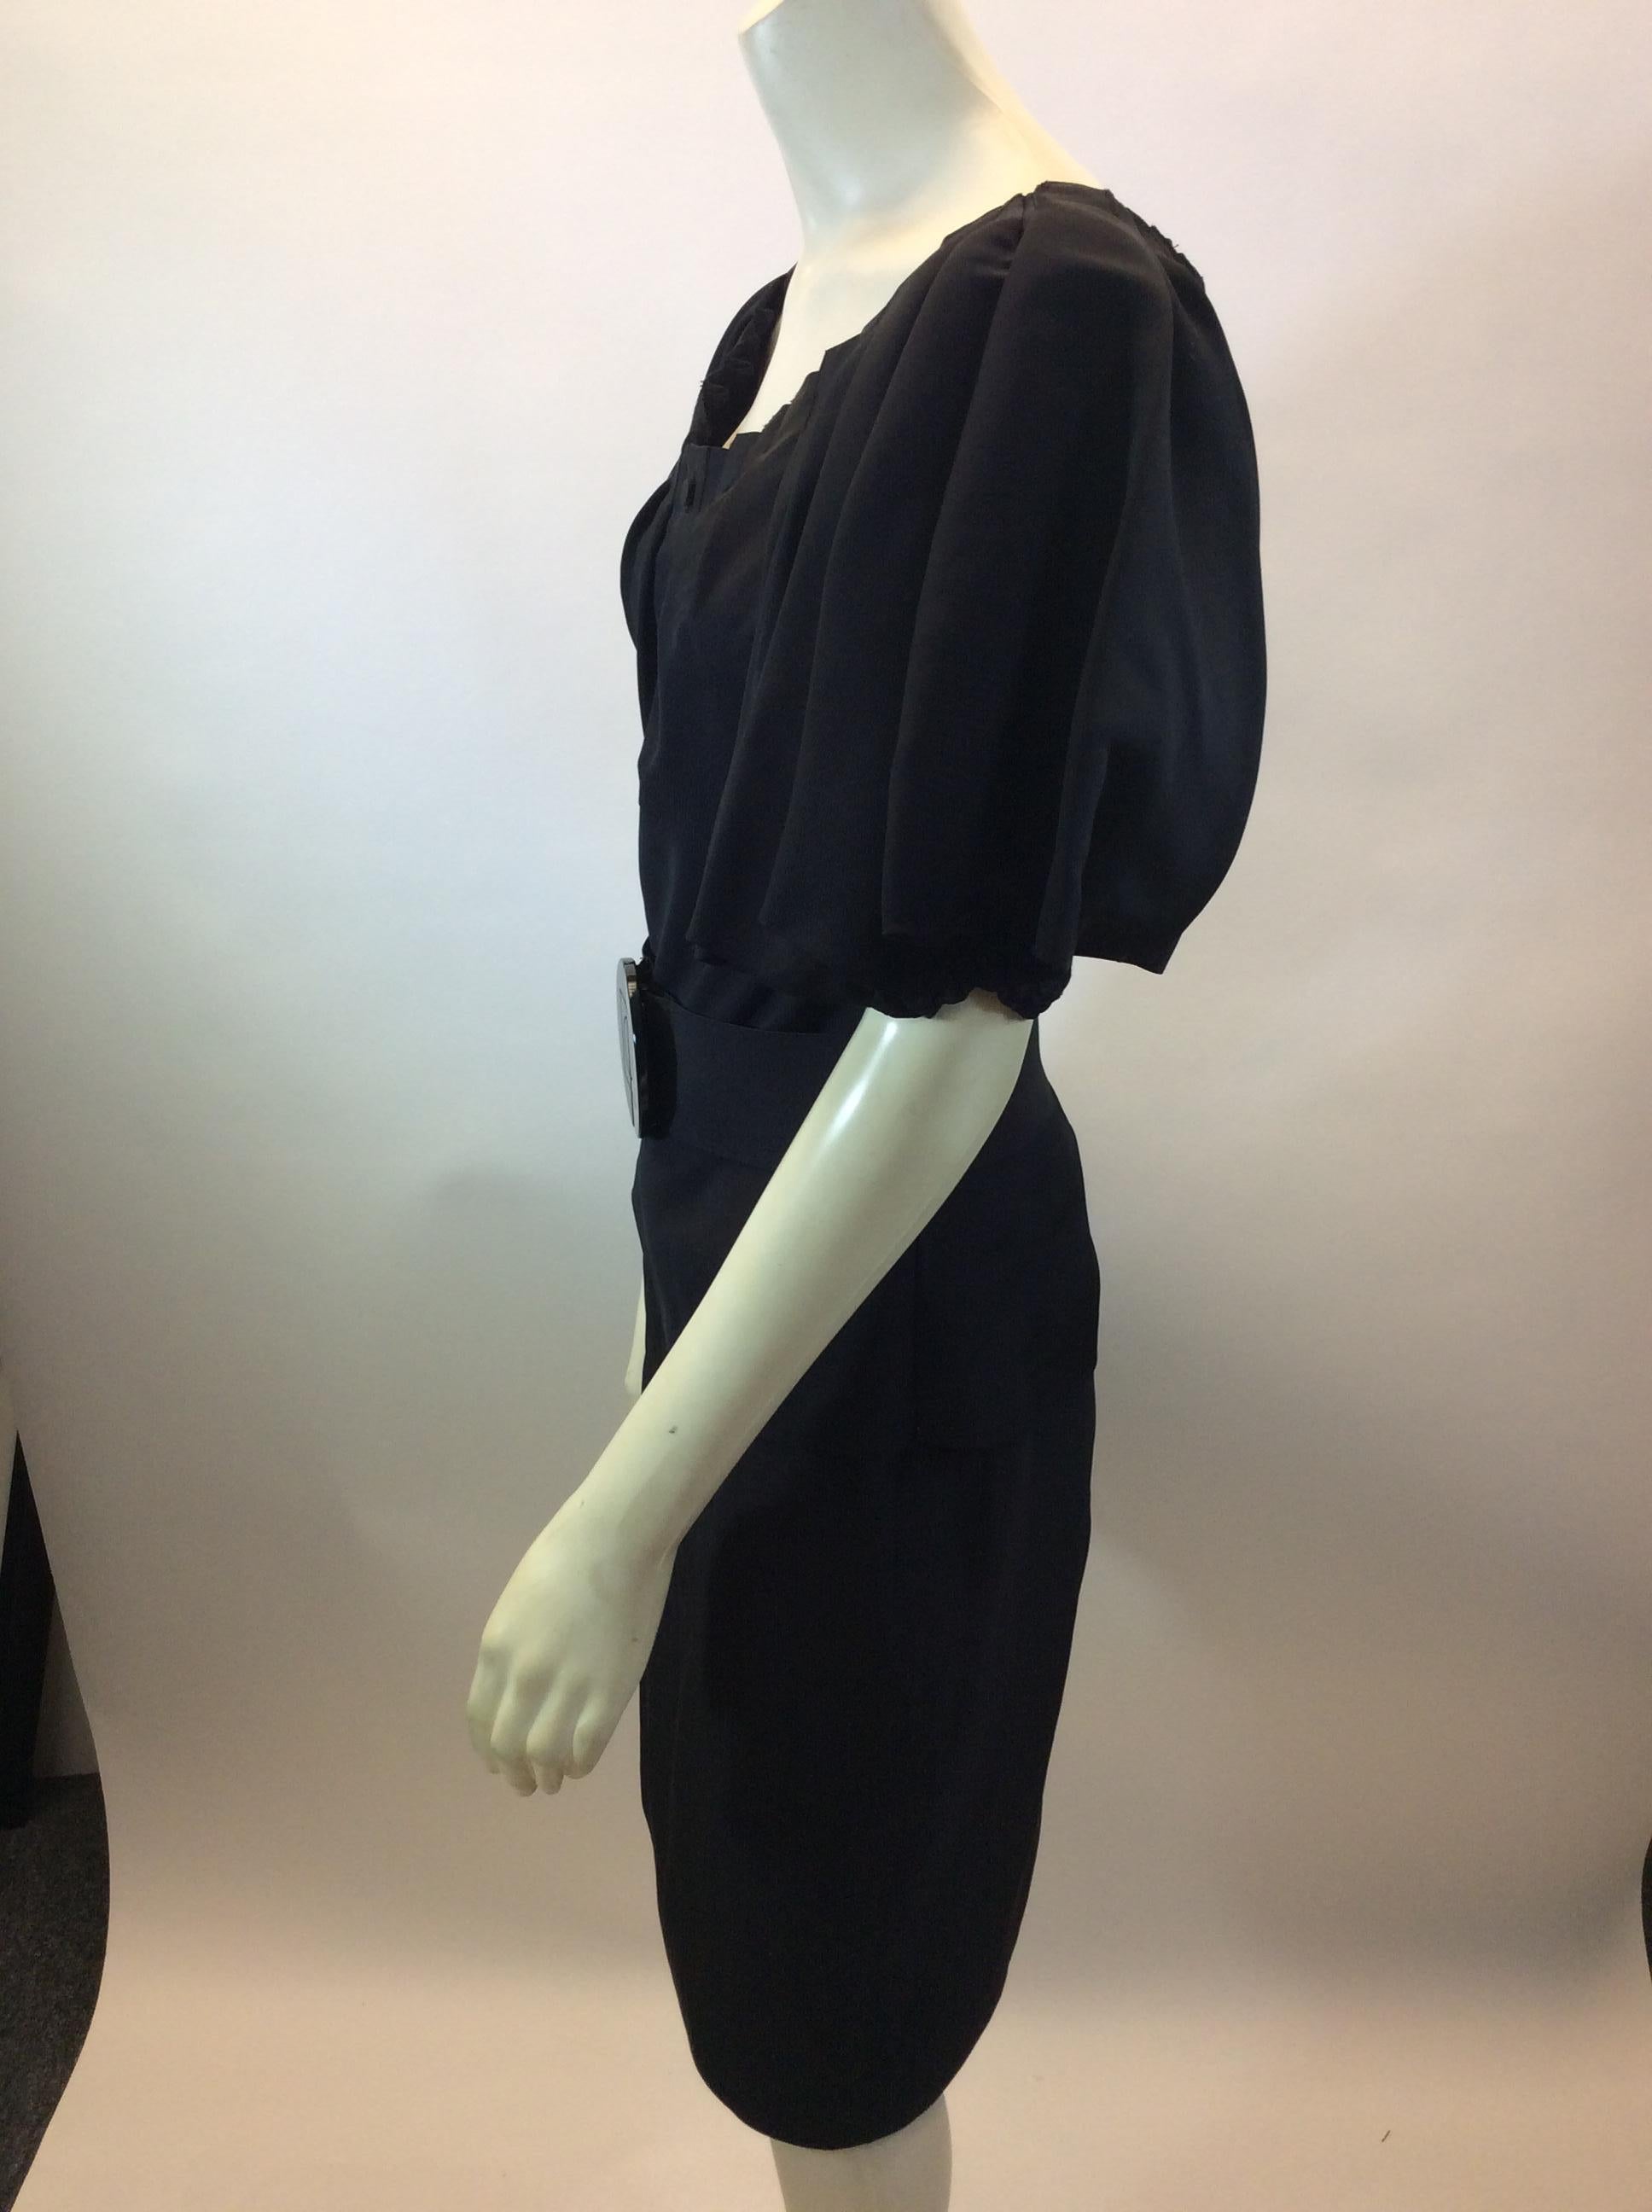 Zac Posen Black Three Piece Skirt Set
$299
Made in the US
100% Silk
Size 6
Skirt:
Length 23.5